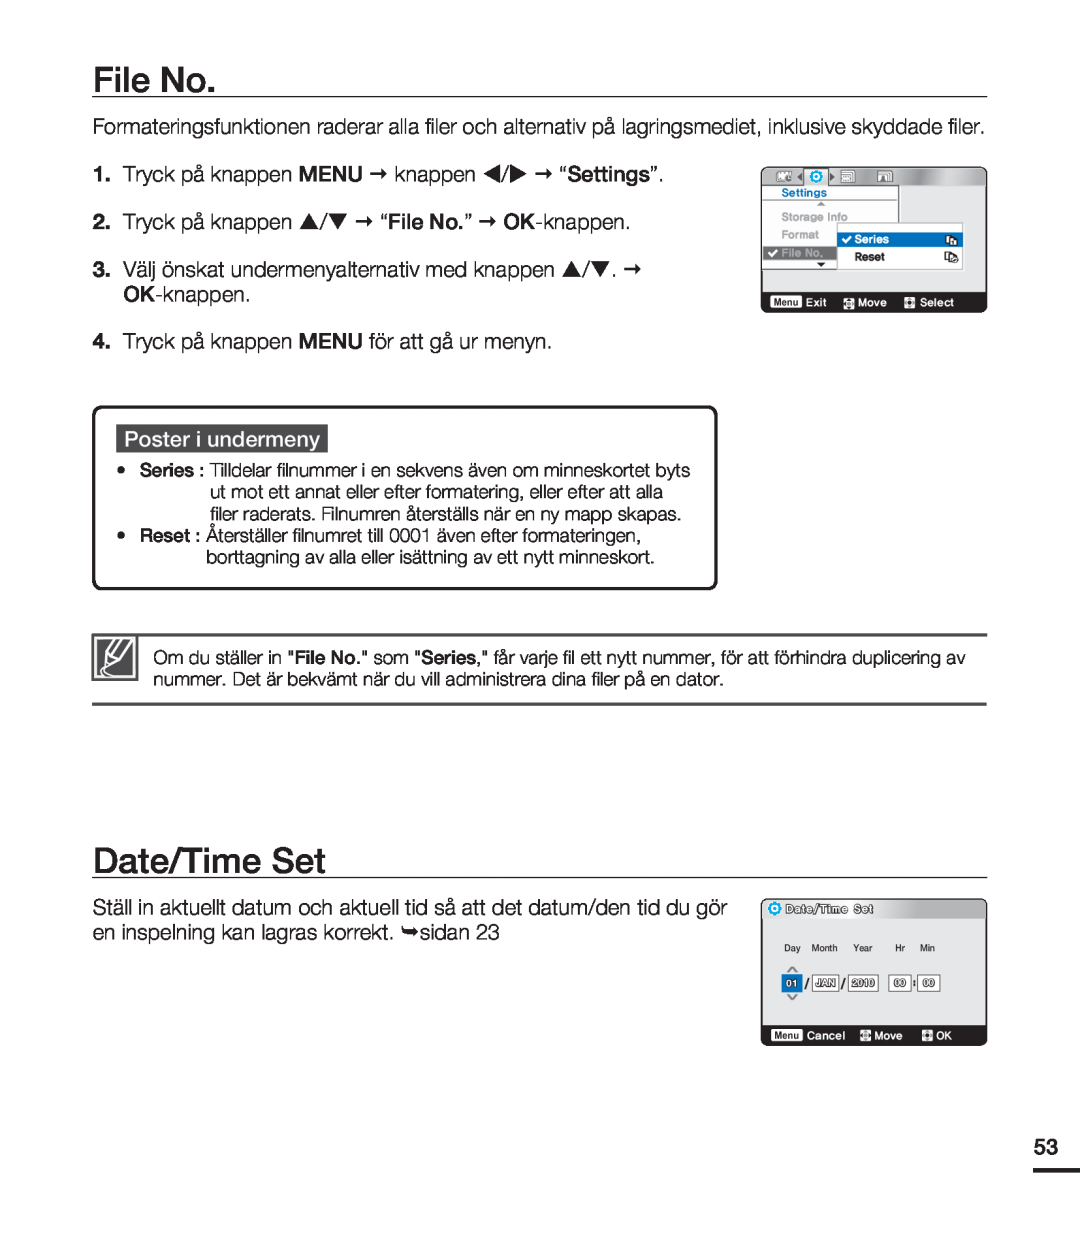 Samsung HMX-U20BP/EDC manual File No, Date/Time Set, Poster i undermeny, 3FTFU 